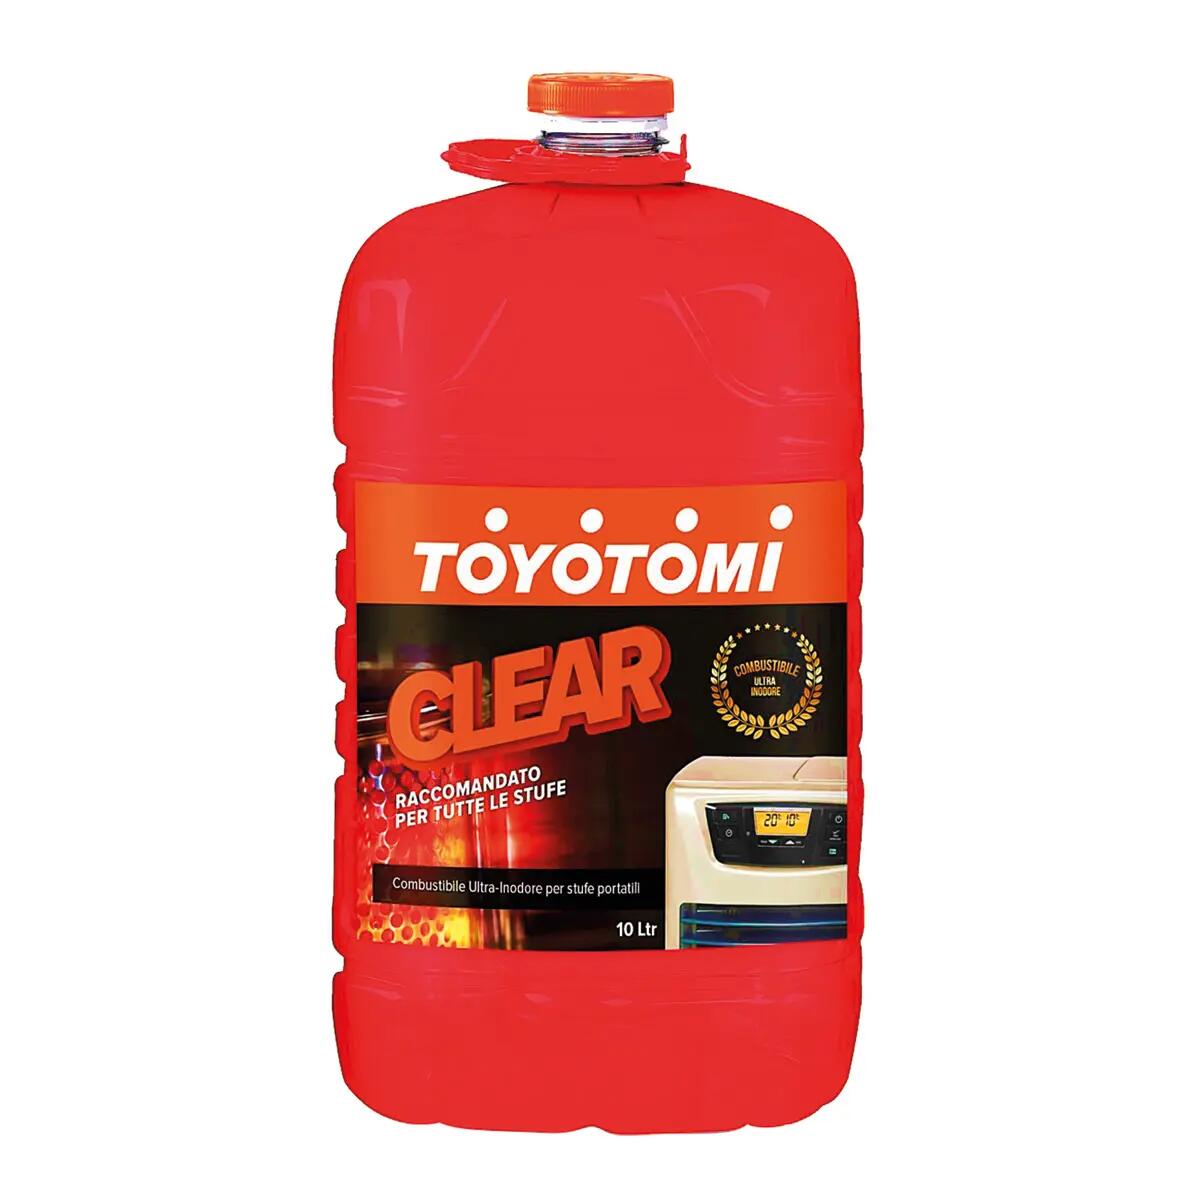 Toyotomi Clear Lt 20 Liquido Per Stufe